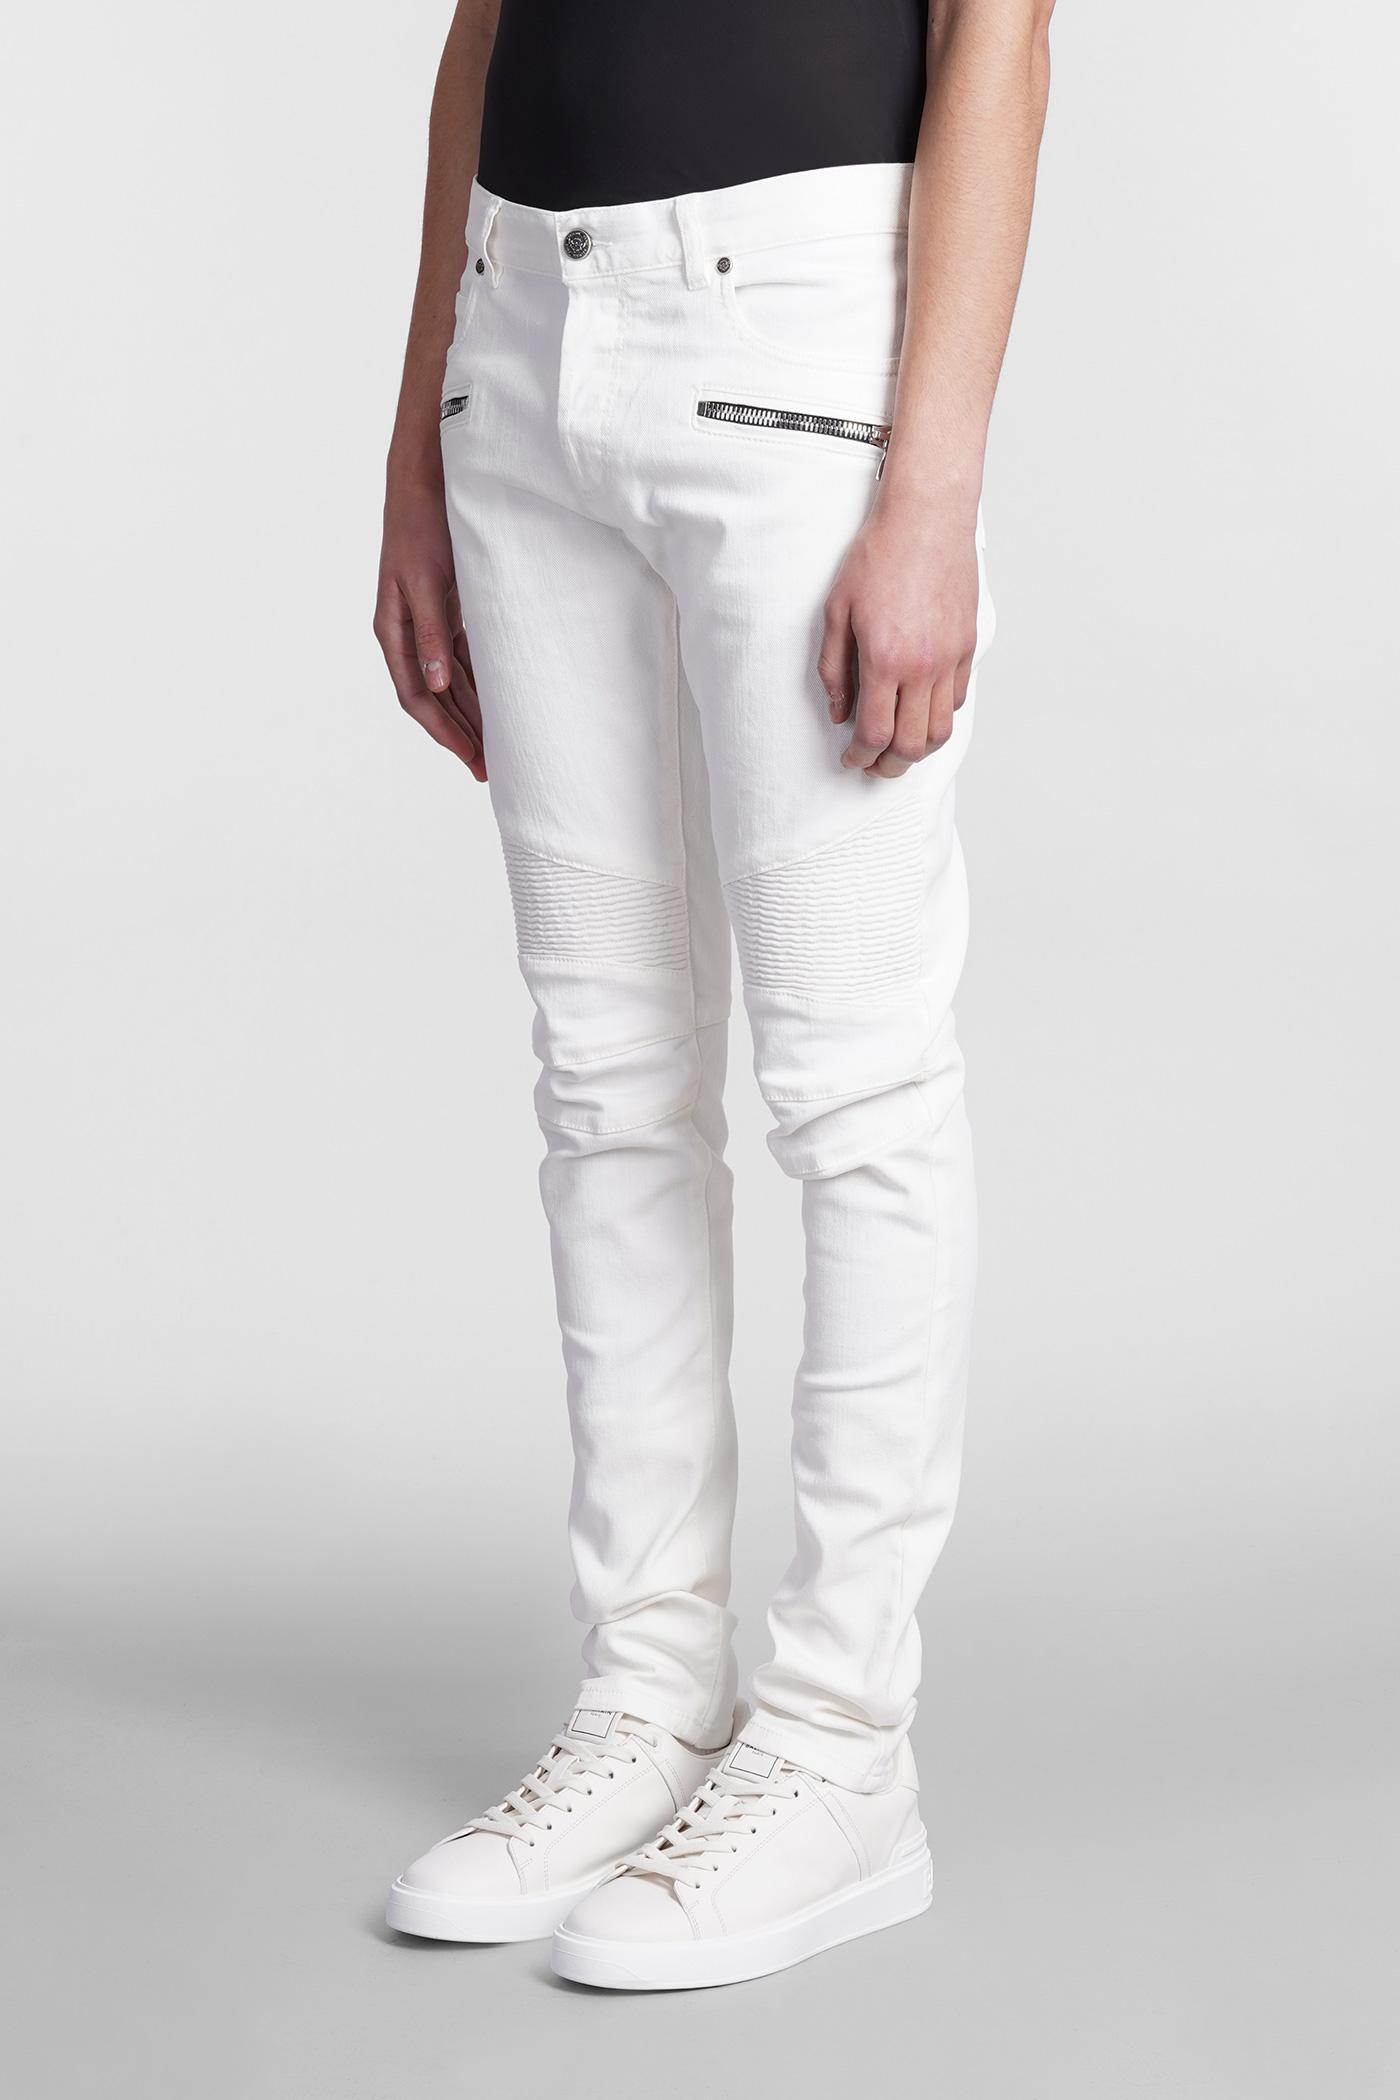 Balmain Jeans In Denim in White for Men | Lyst